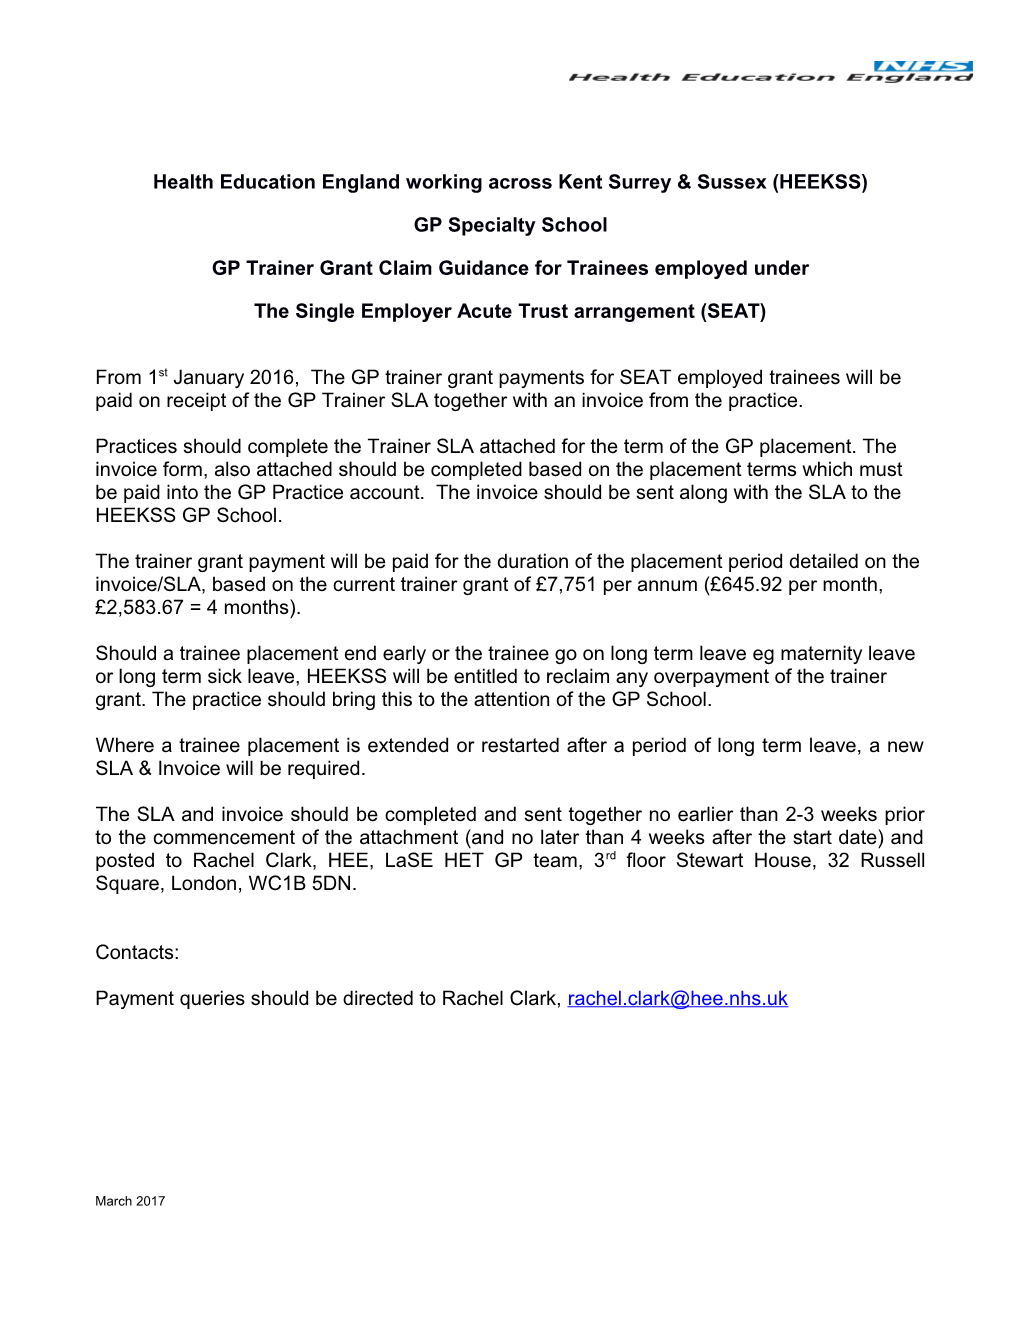 Health Education England Working Across Kent Surrey & Sussex (HEEKSS)